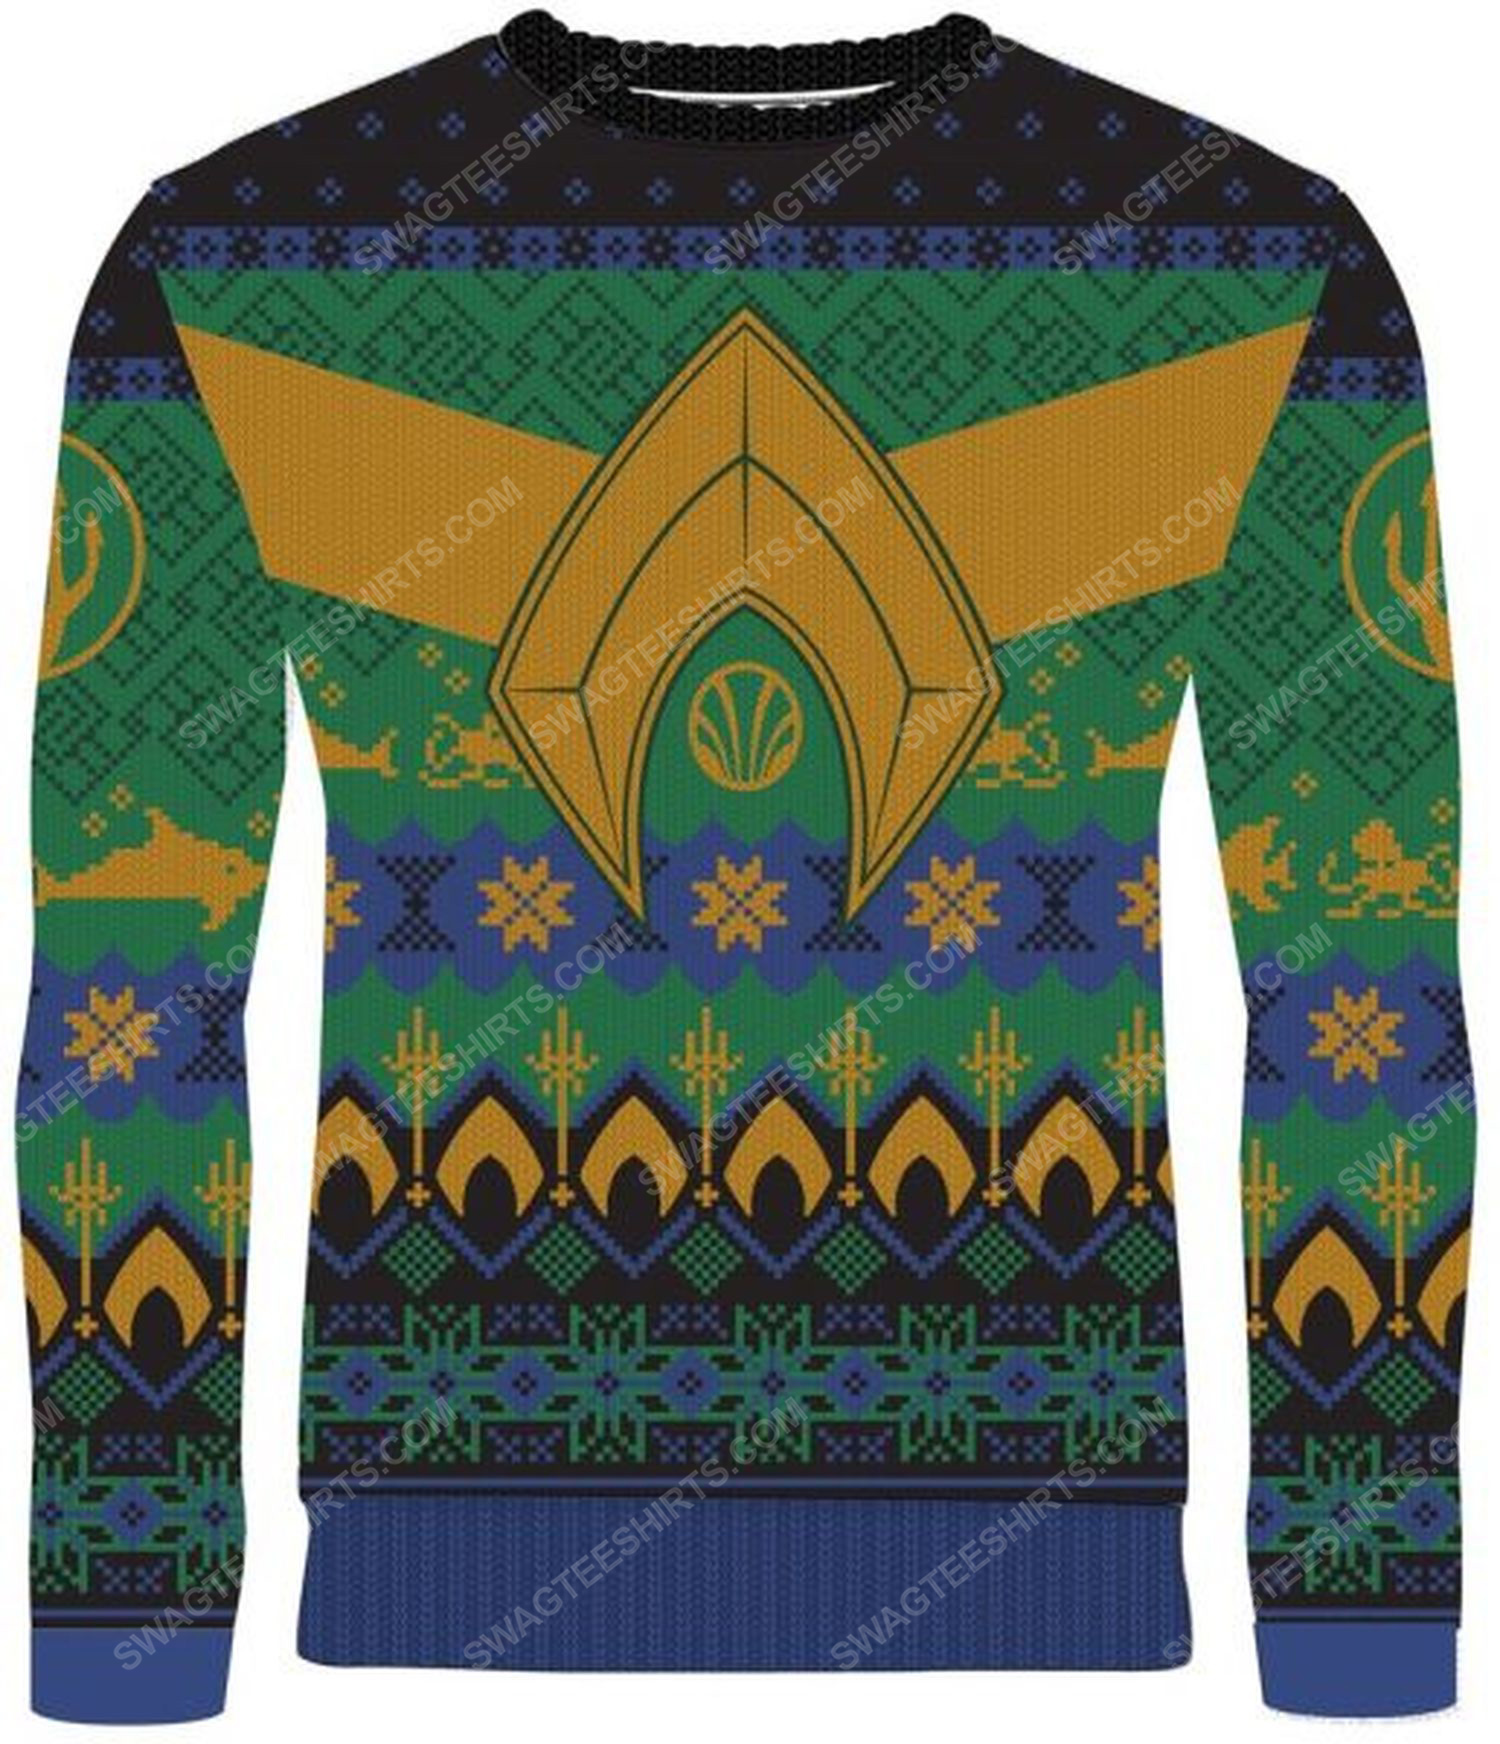 Atlantean tidings full print ugly christmas sweater 2 - Copy (2)